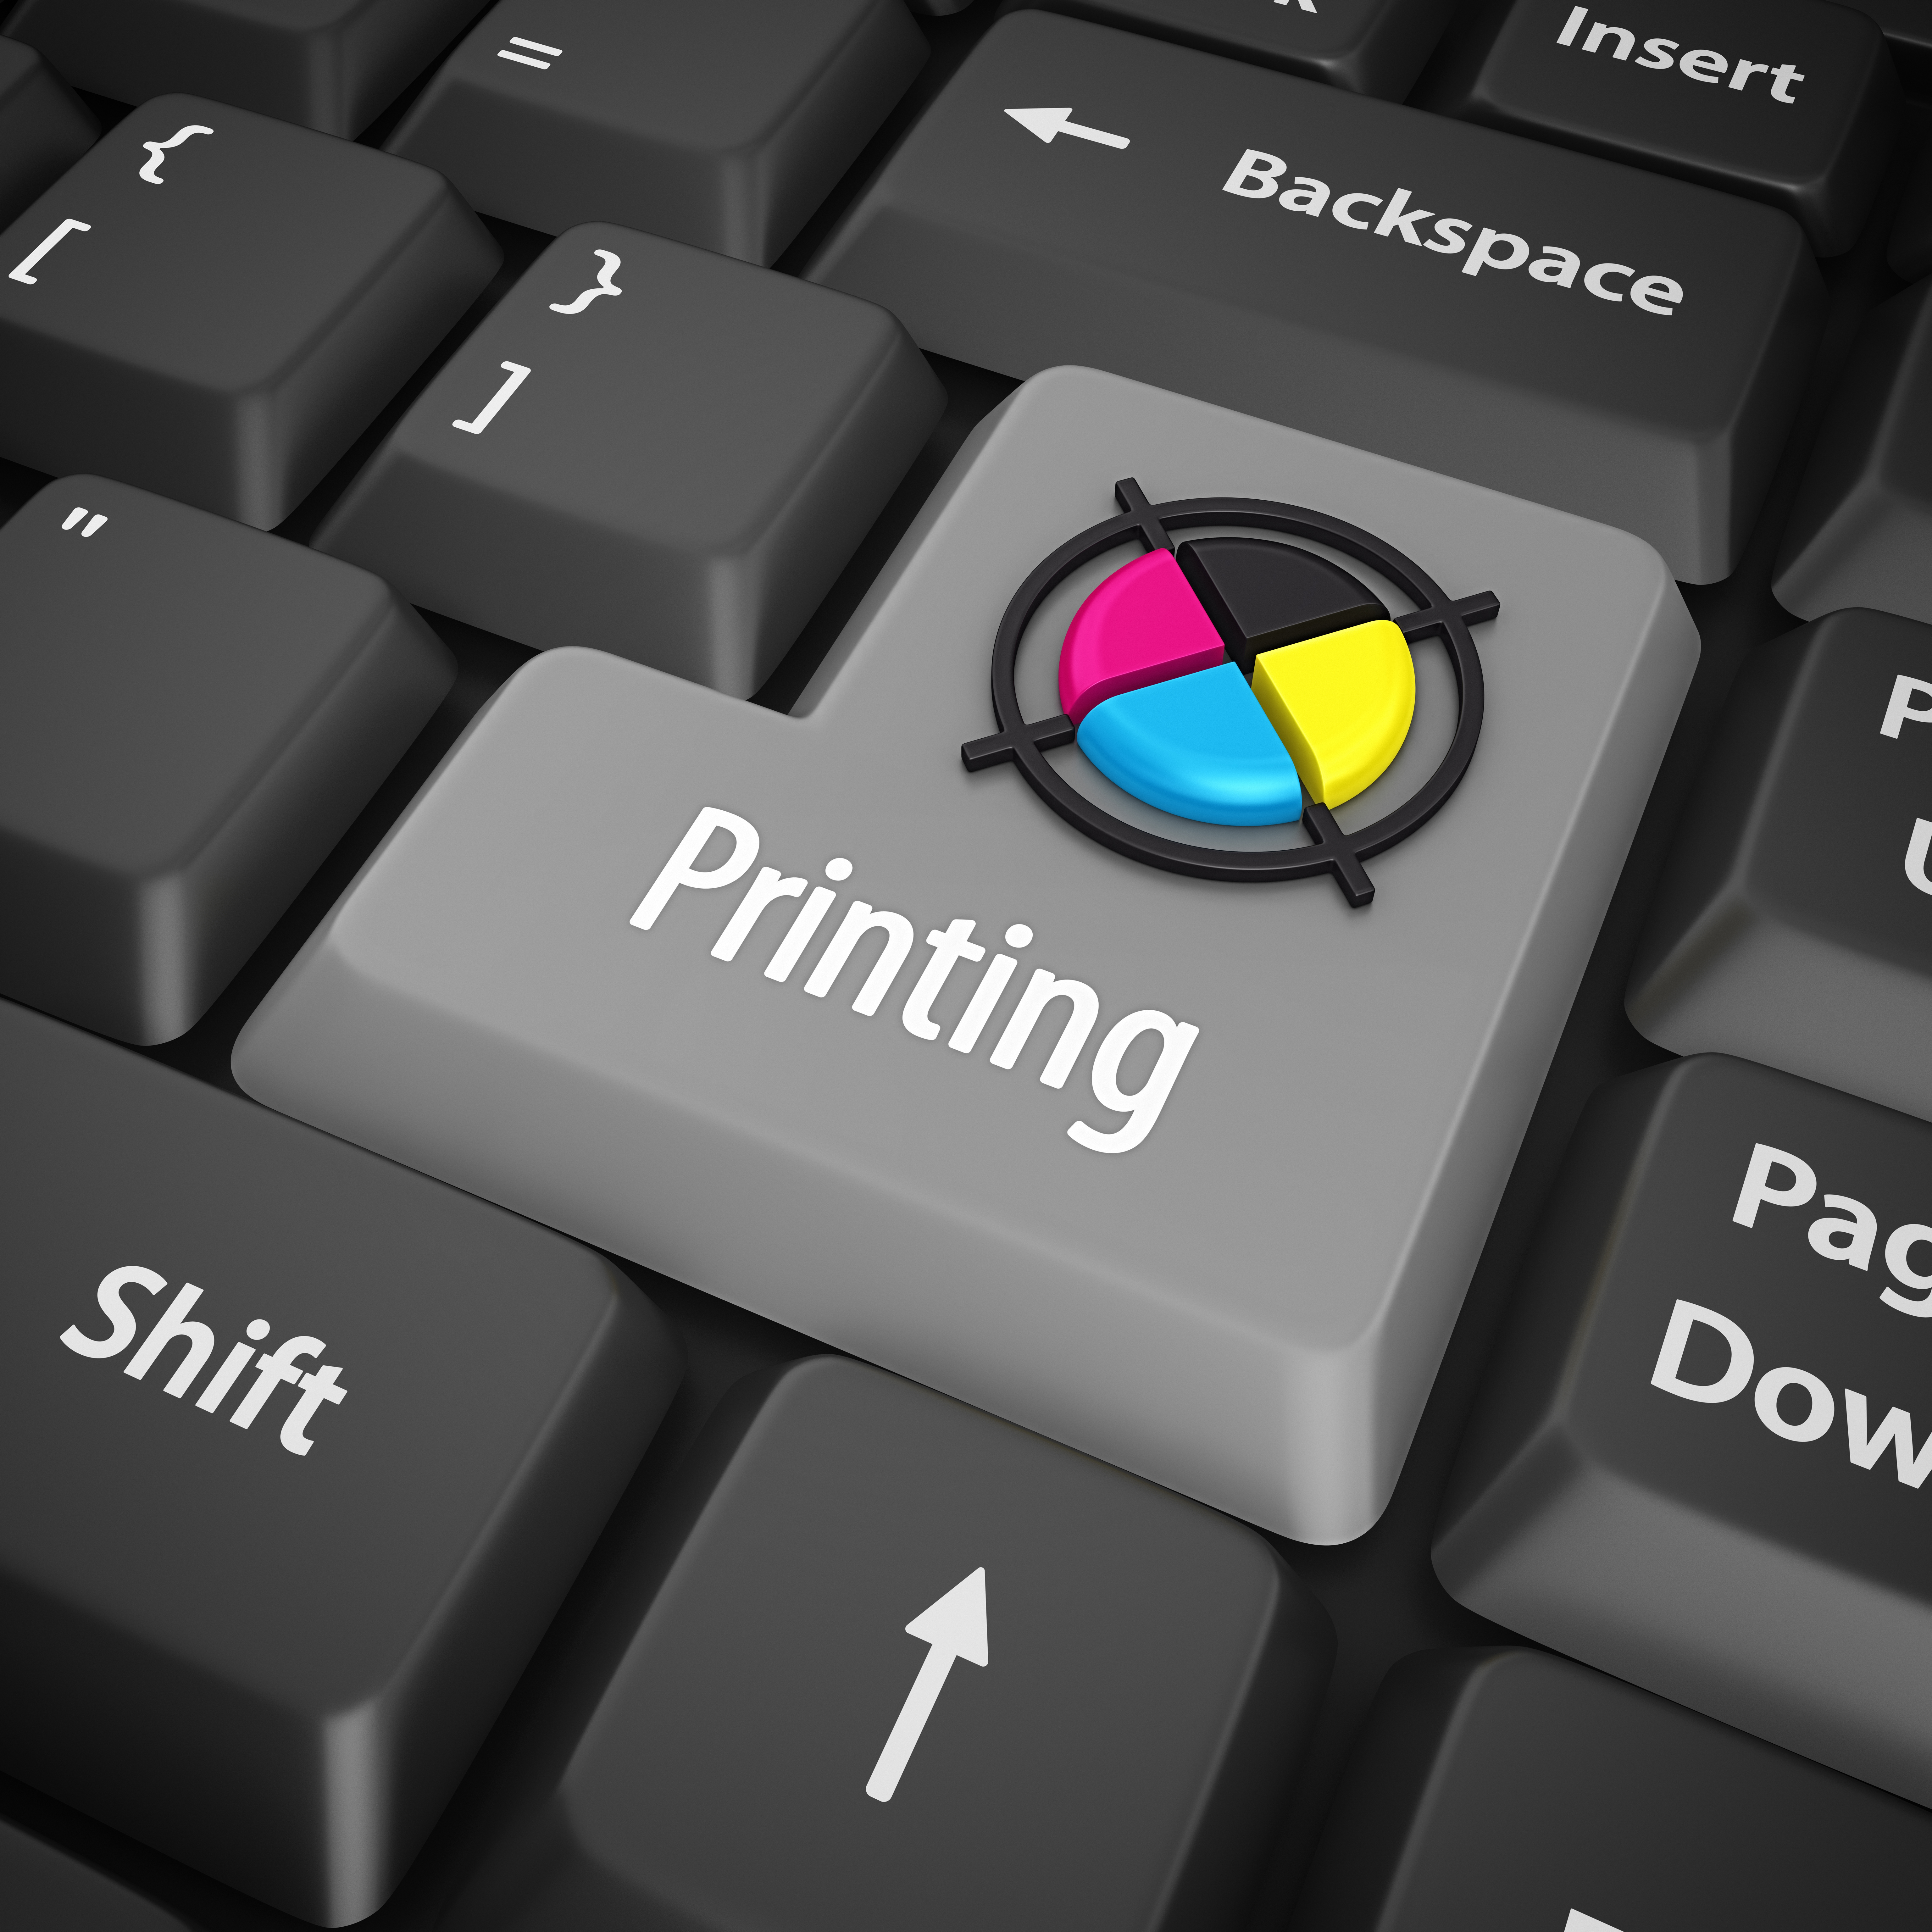 Printing button on keyboard